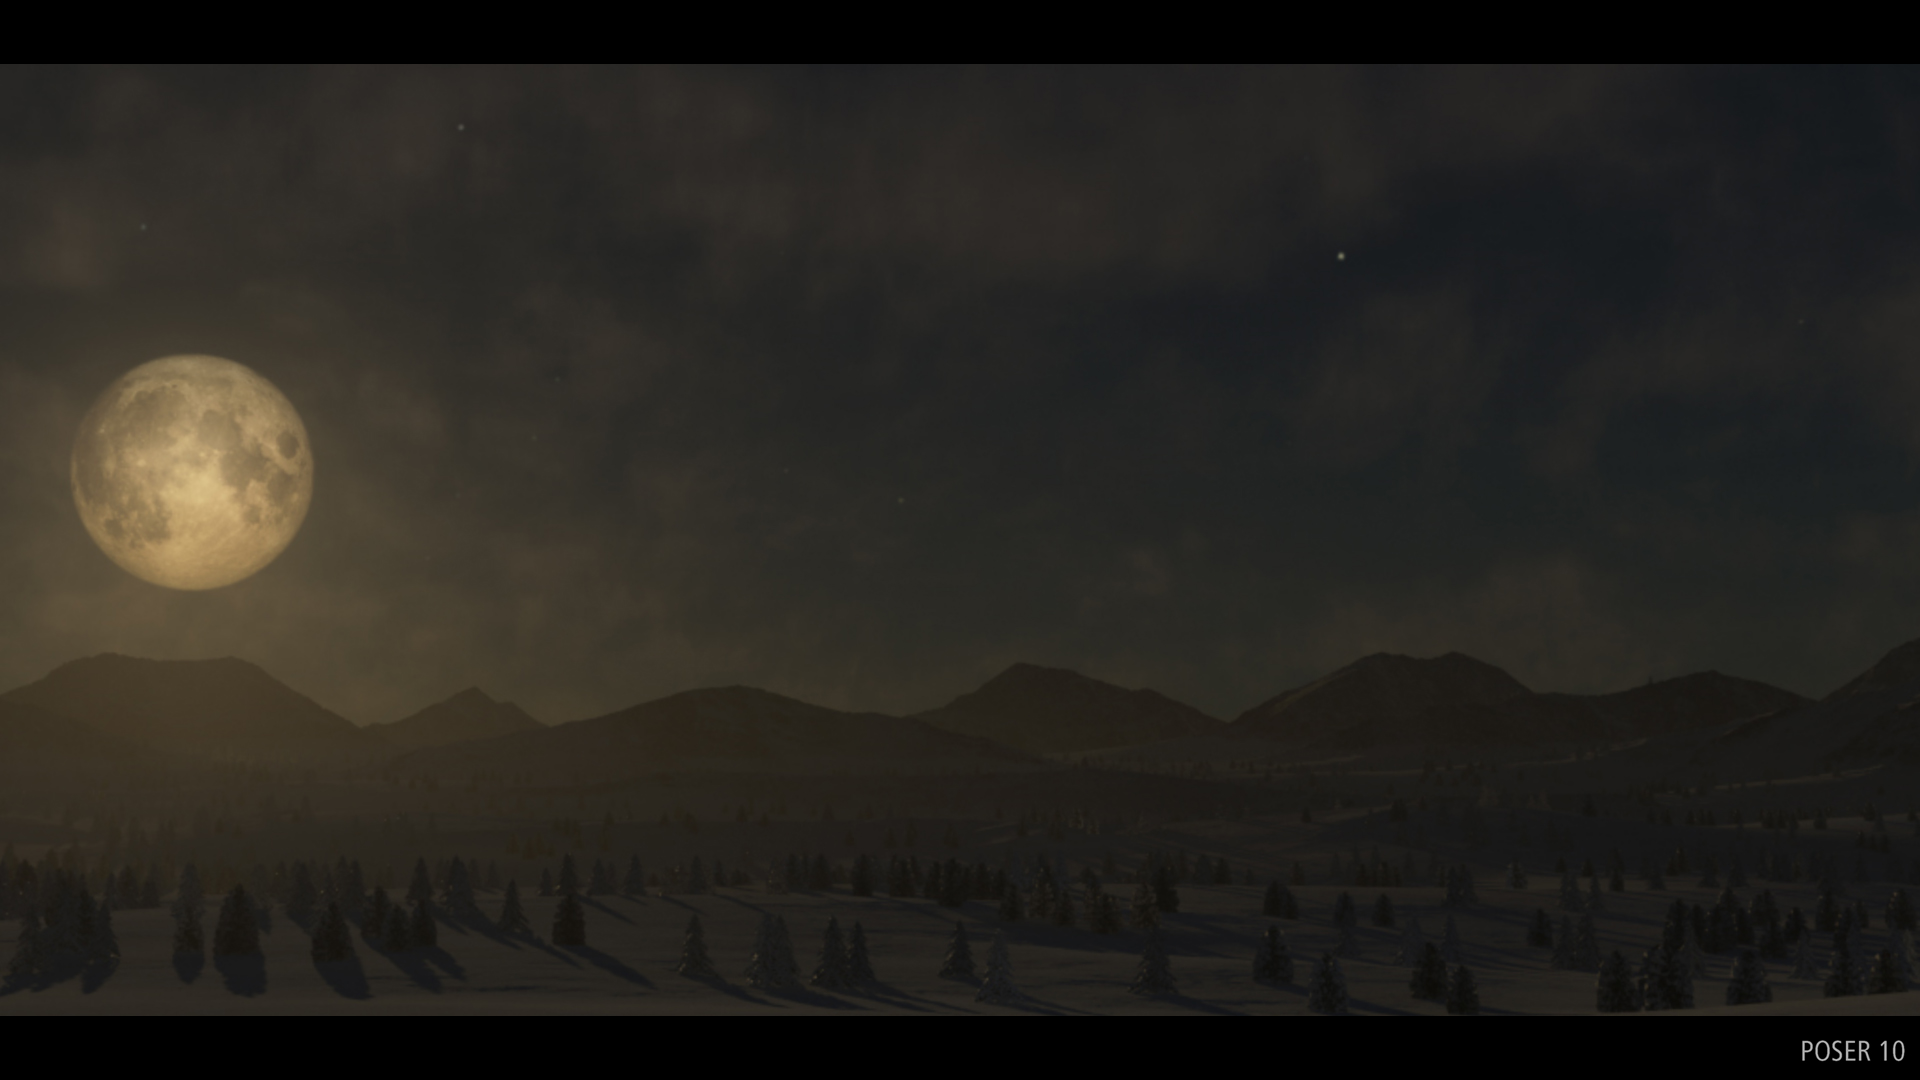 Easy Environments: Winter II Night & Dawn by: Flipmode, 3D Models by Daz 3D